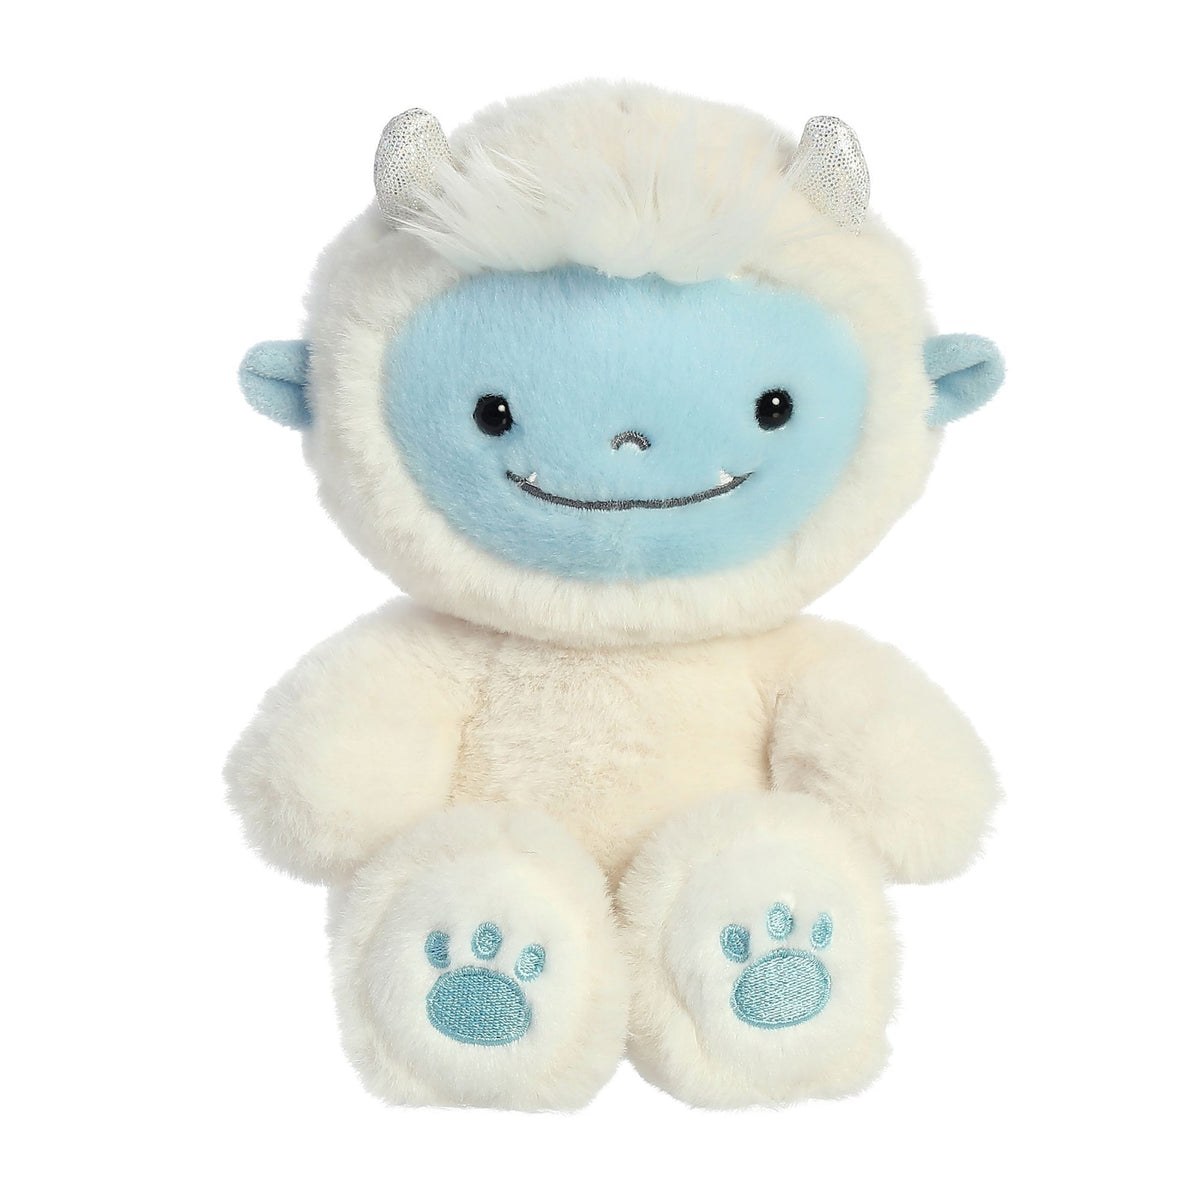 NoJo Hello! Lucky Yeti White and Blue Plush Stuffed Animal with Rabbit Plush